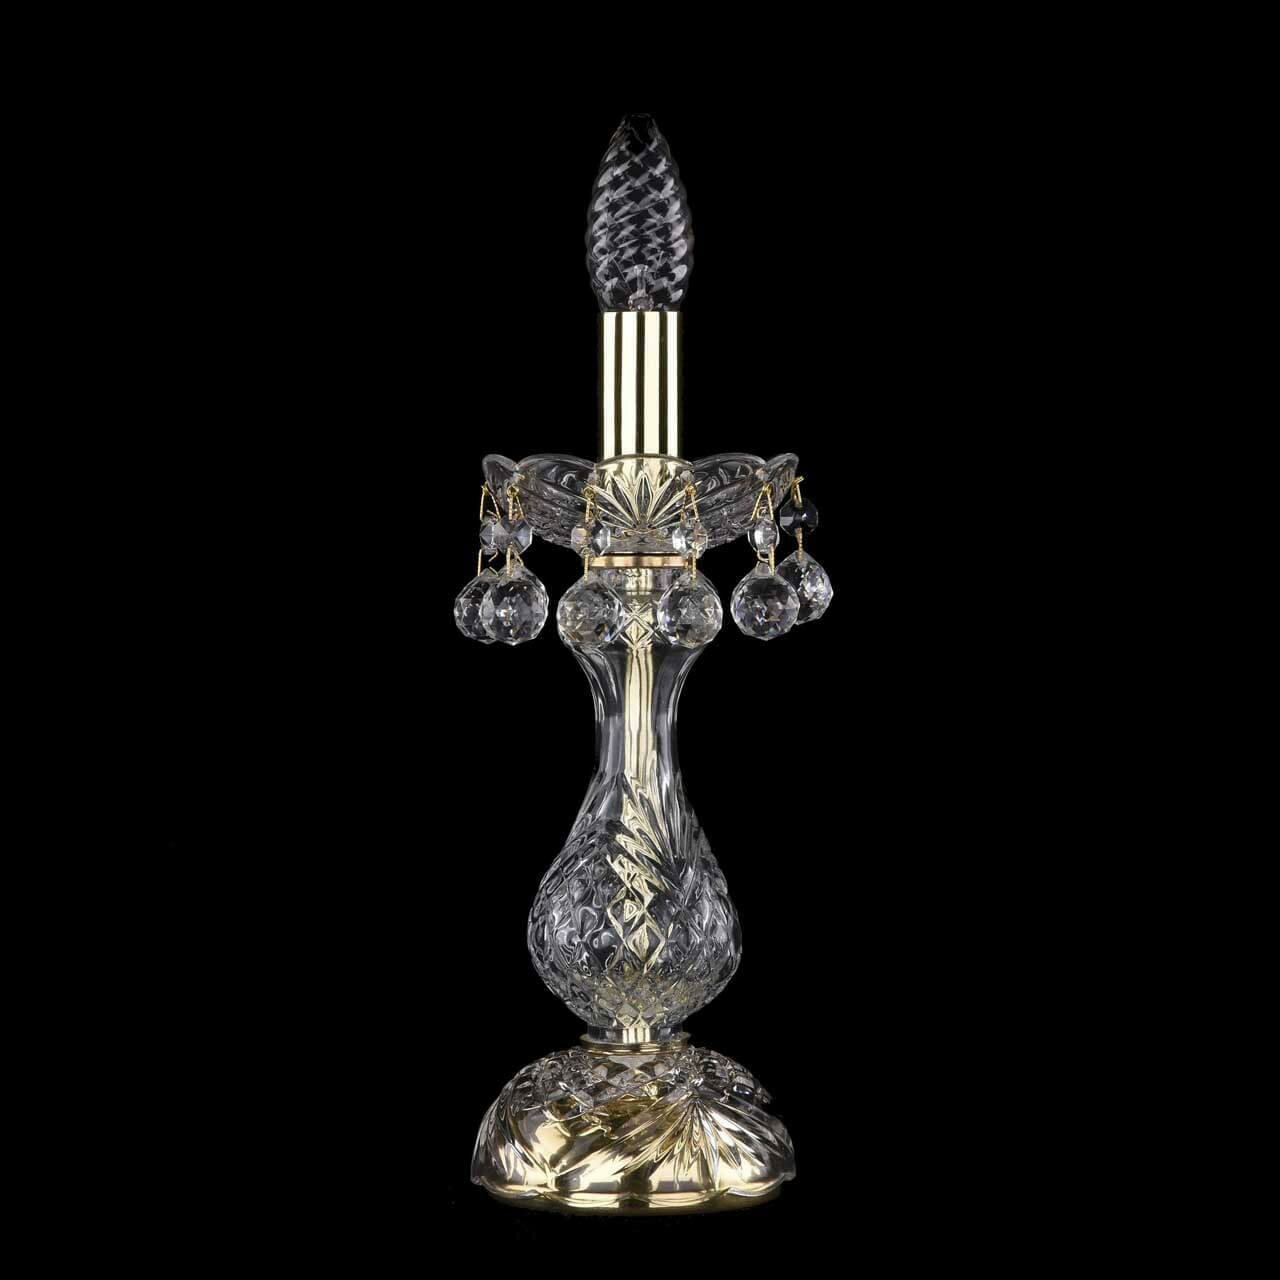 Bohemia Ivele Crystal Настольная лампа Bohemia Ivele 1409L/1-31/G